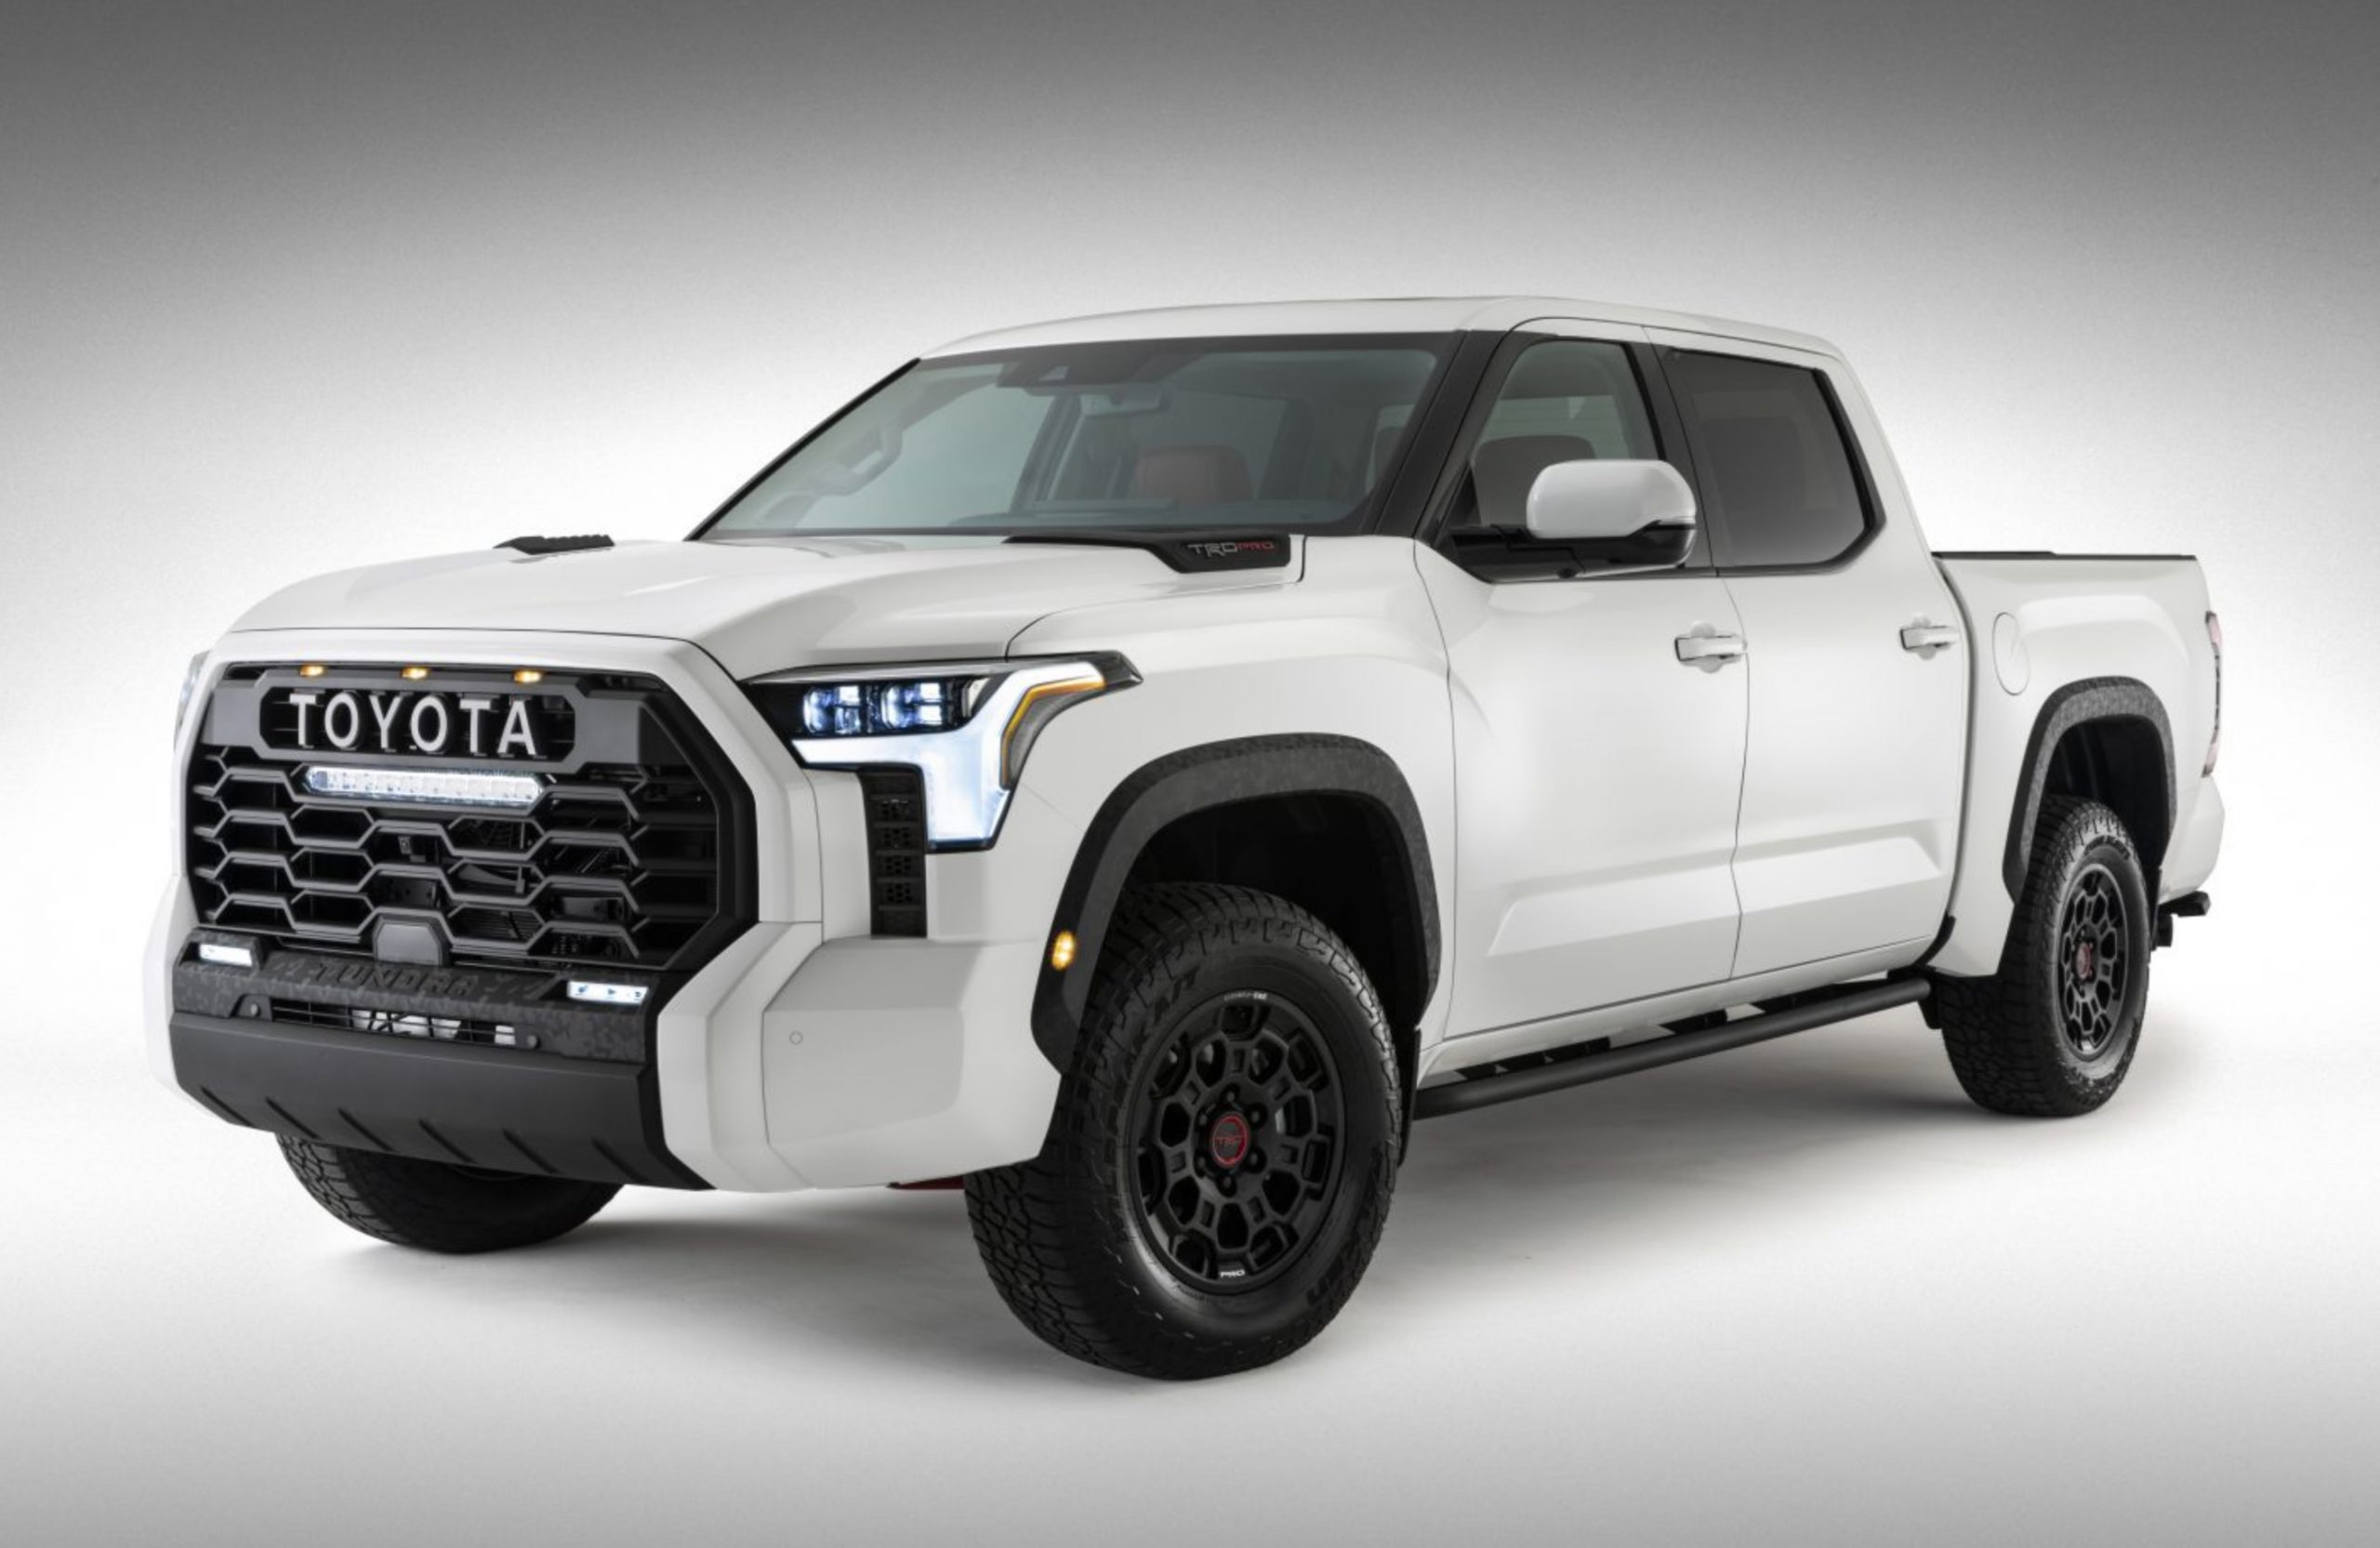 2022 Toyota Tundra exterior design officially revealed